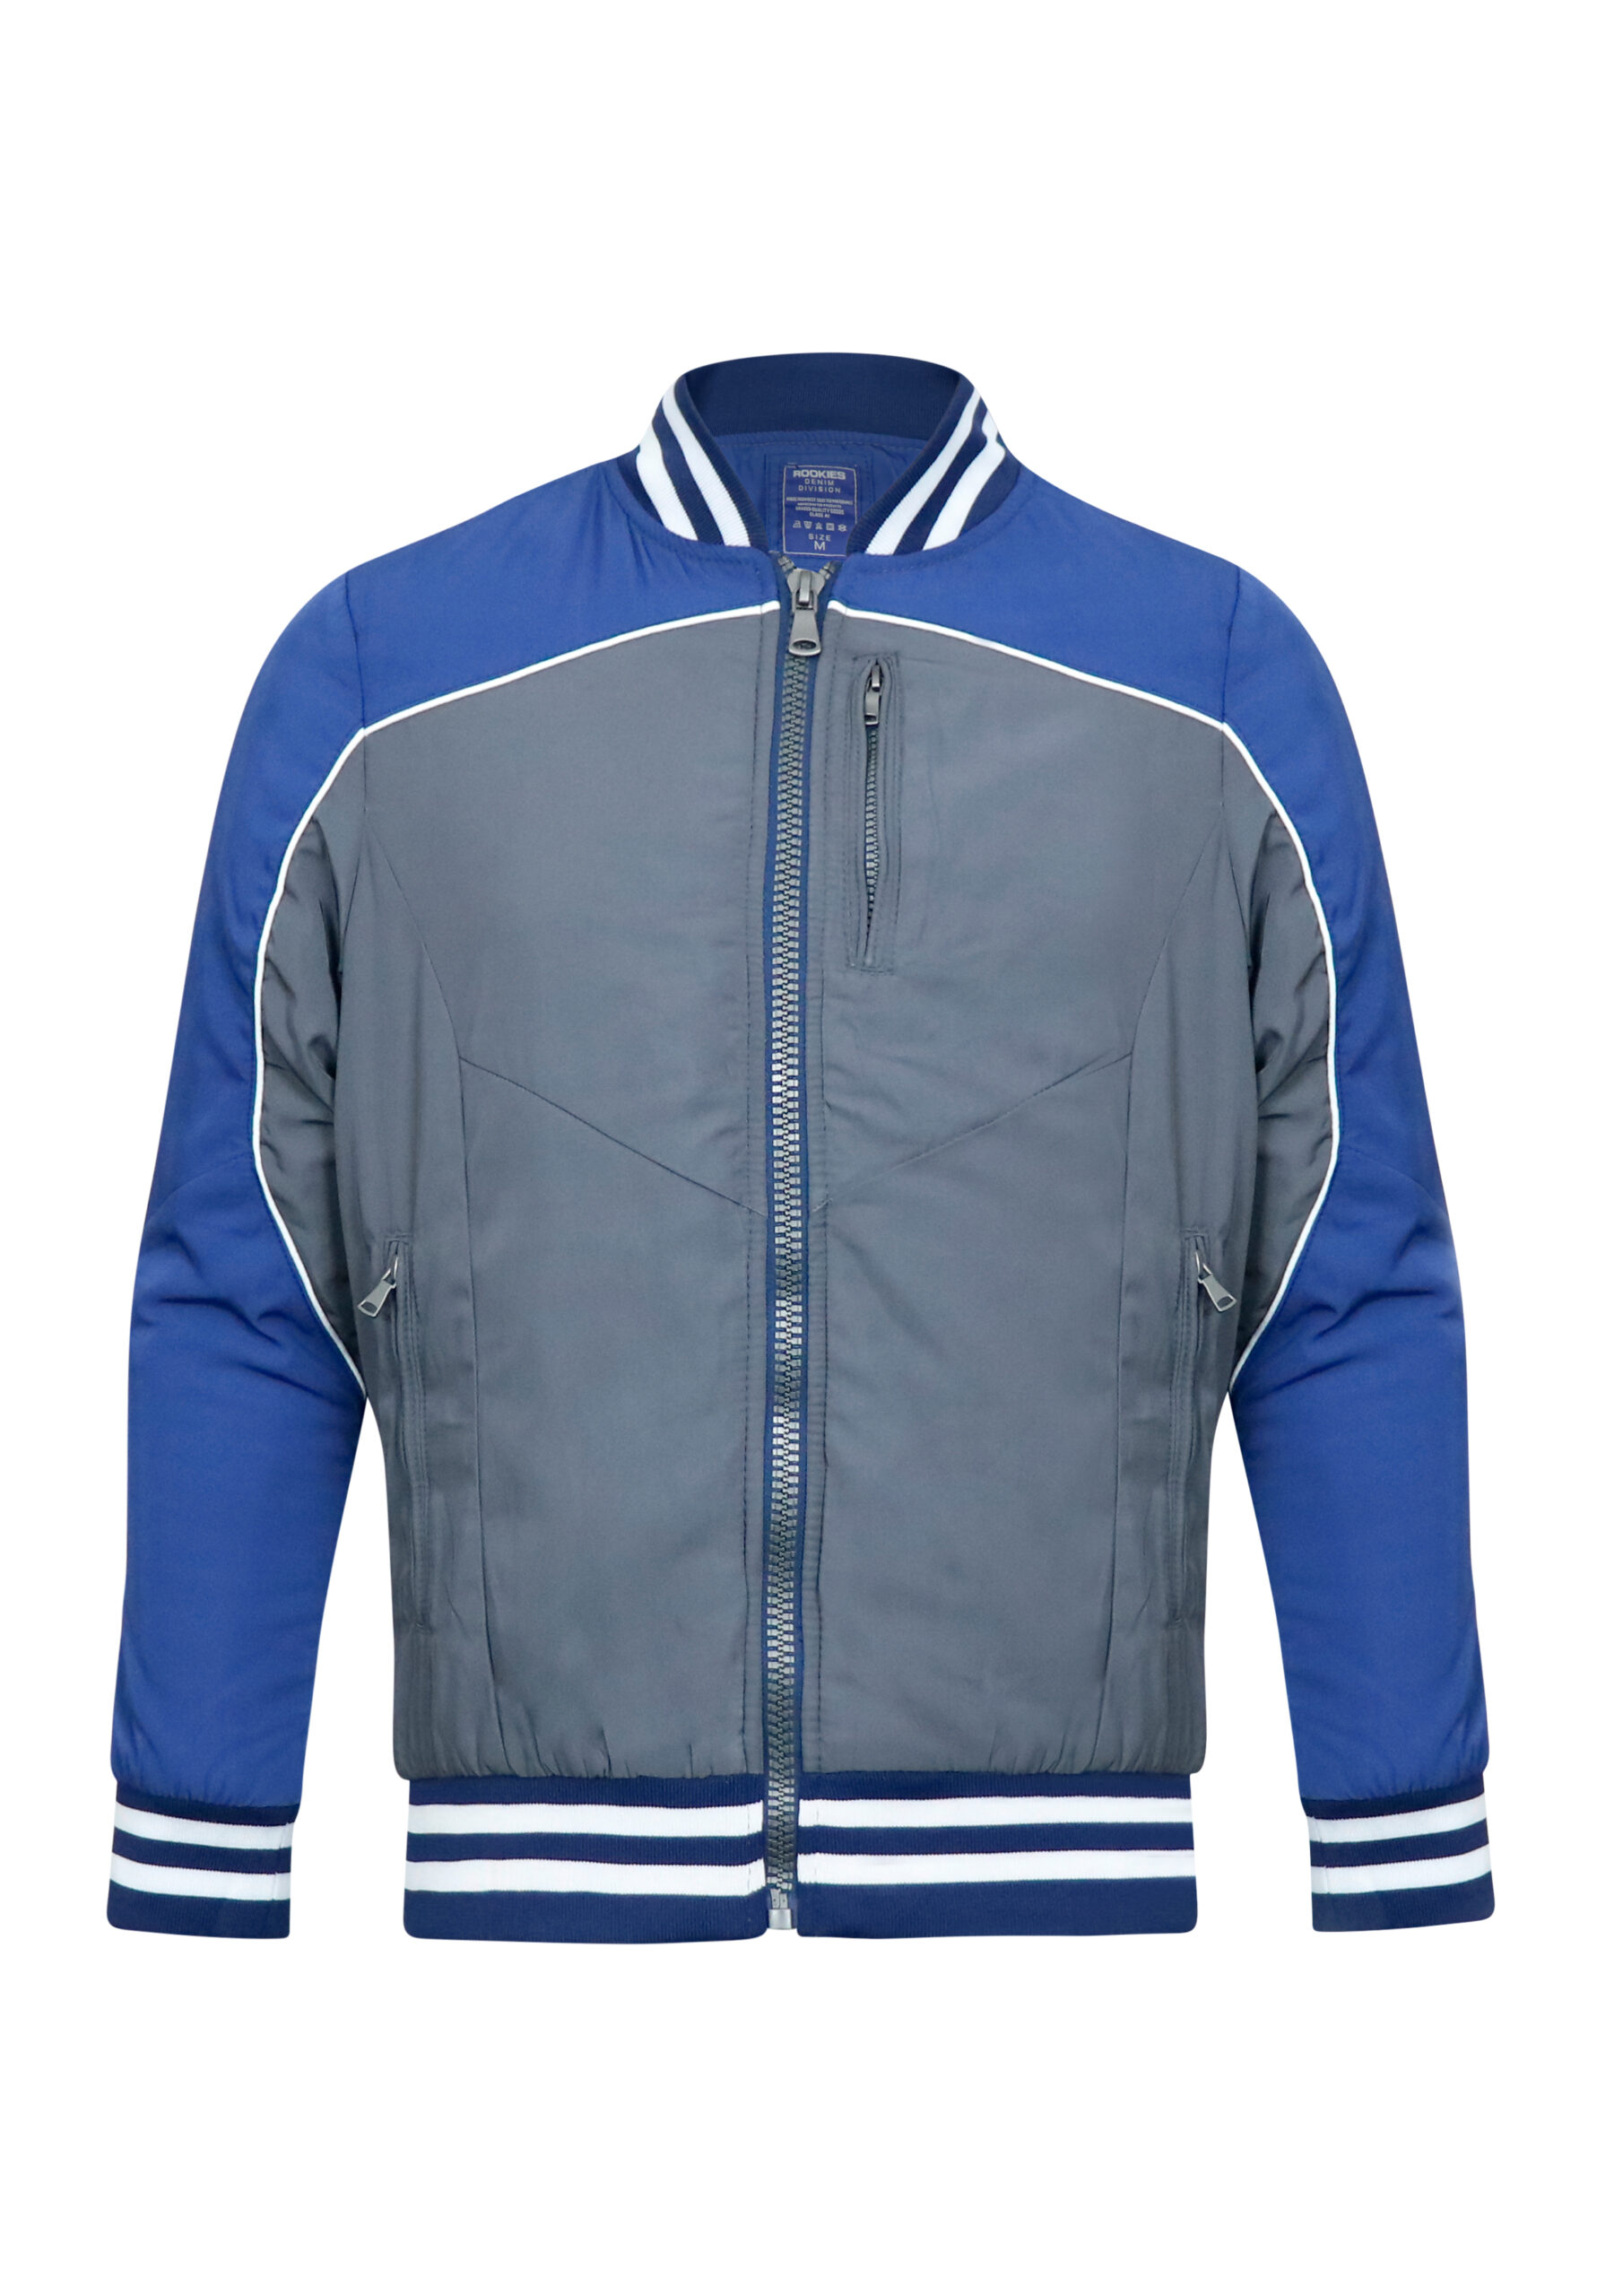 Men’s Jacket - Artisan Outfitters Ltd